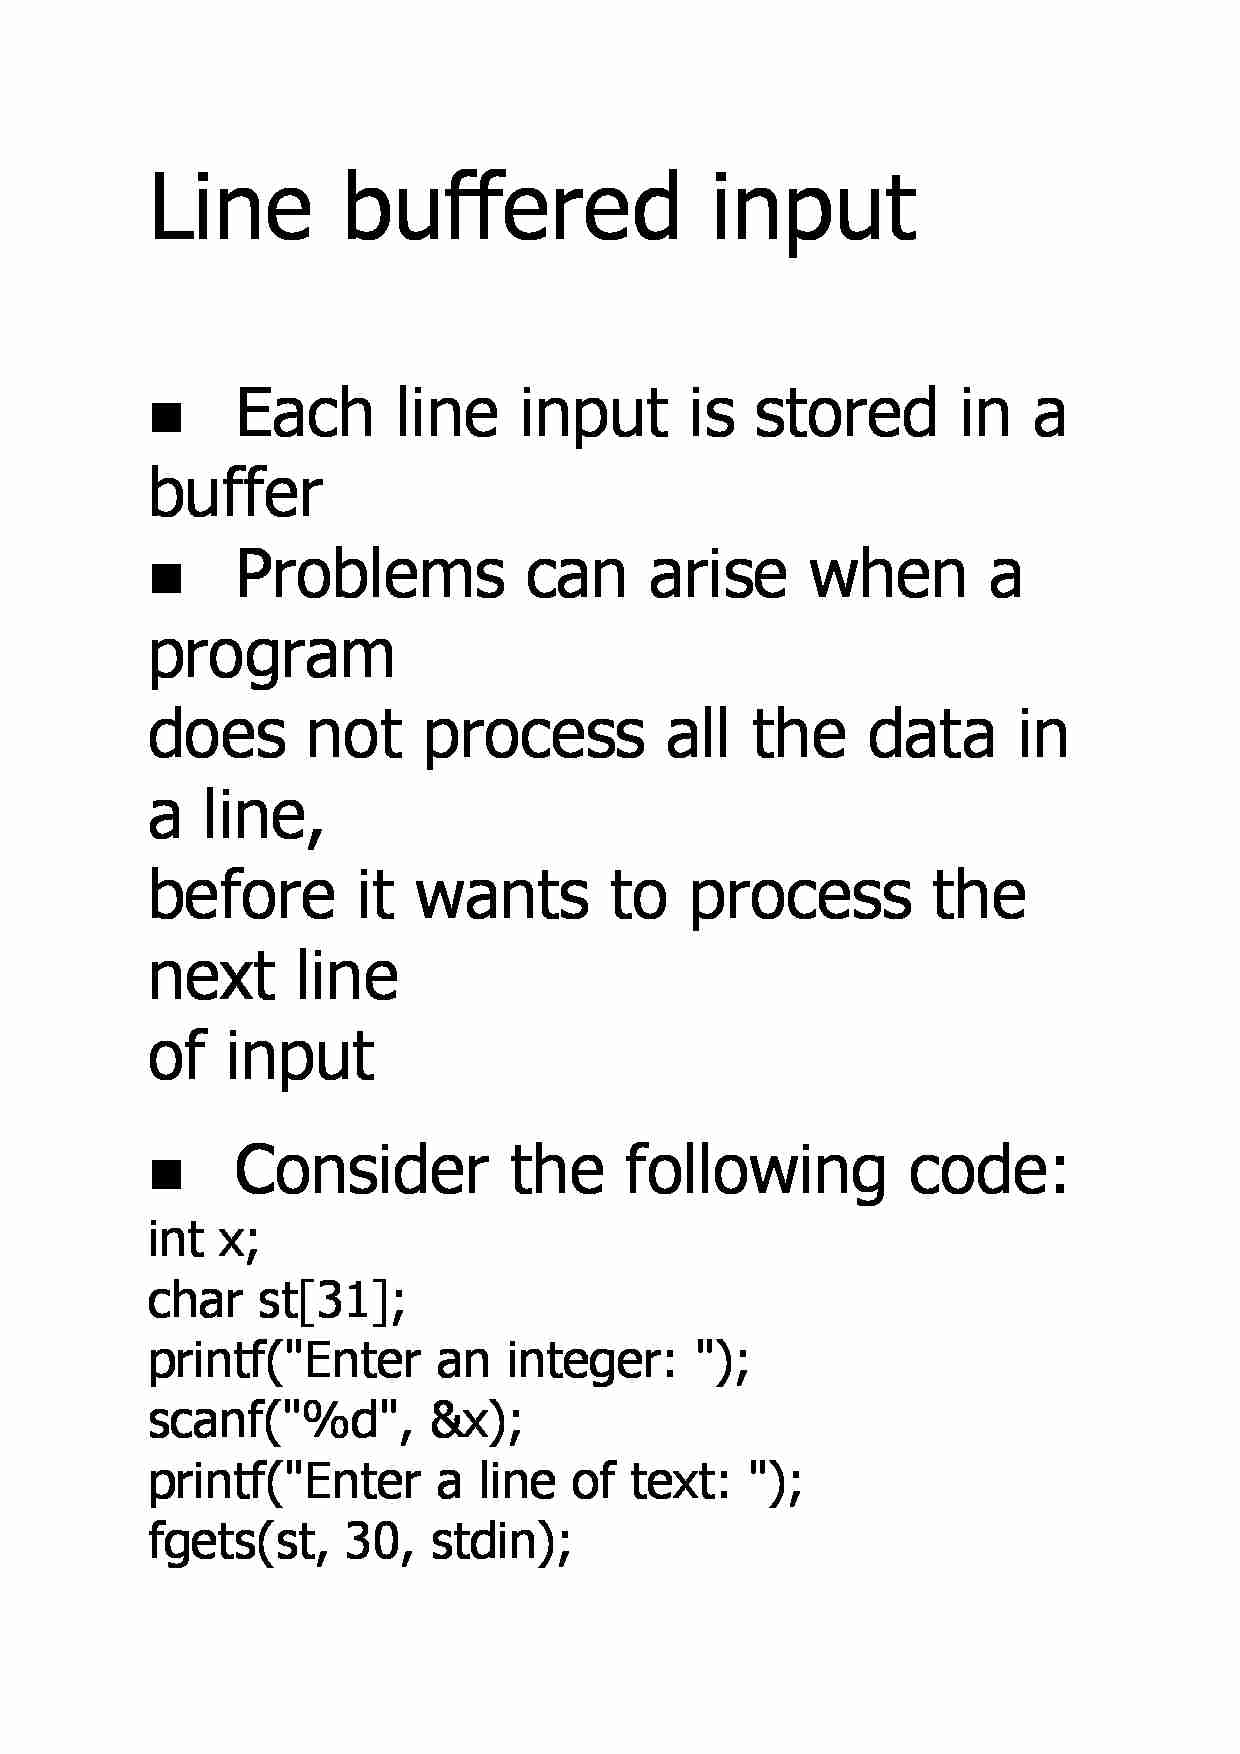 Line buffered input - strona 1